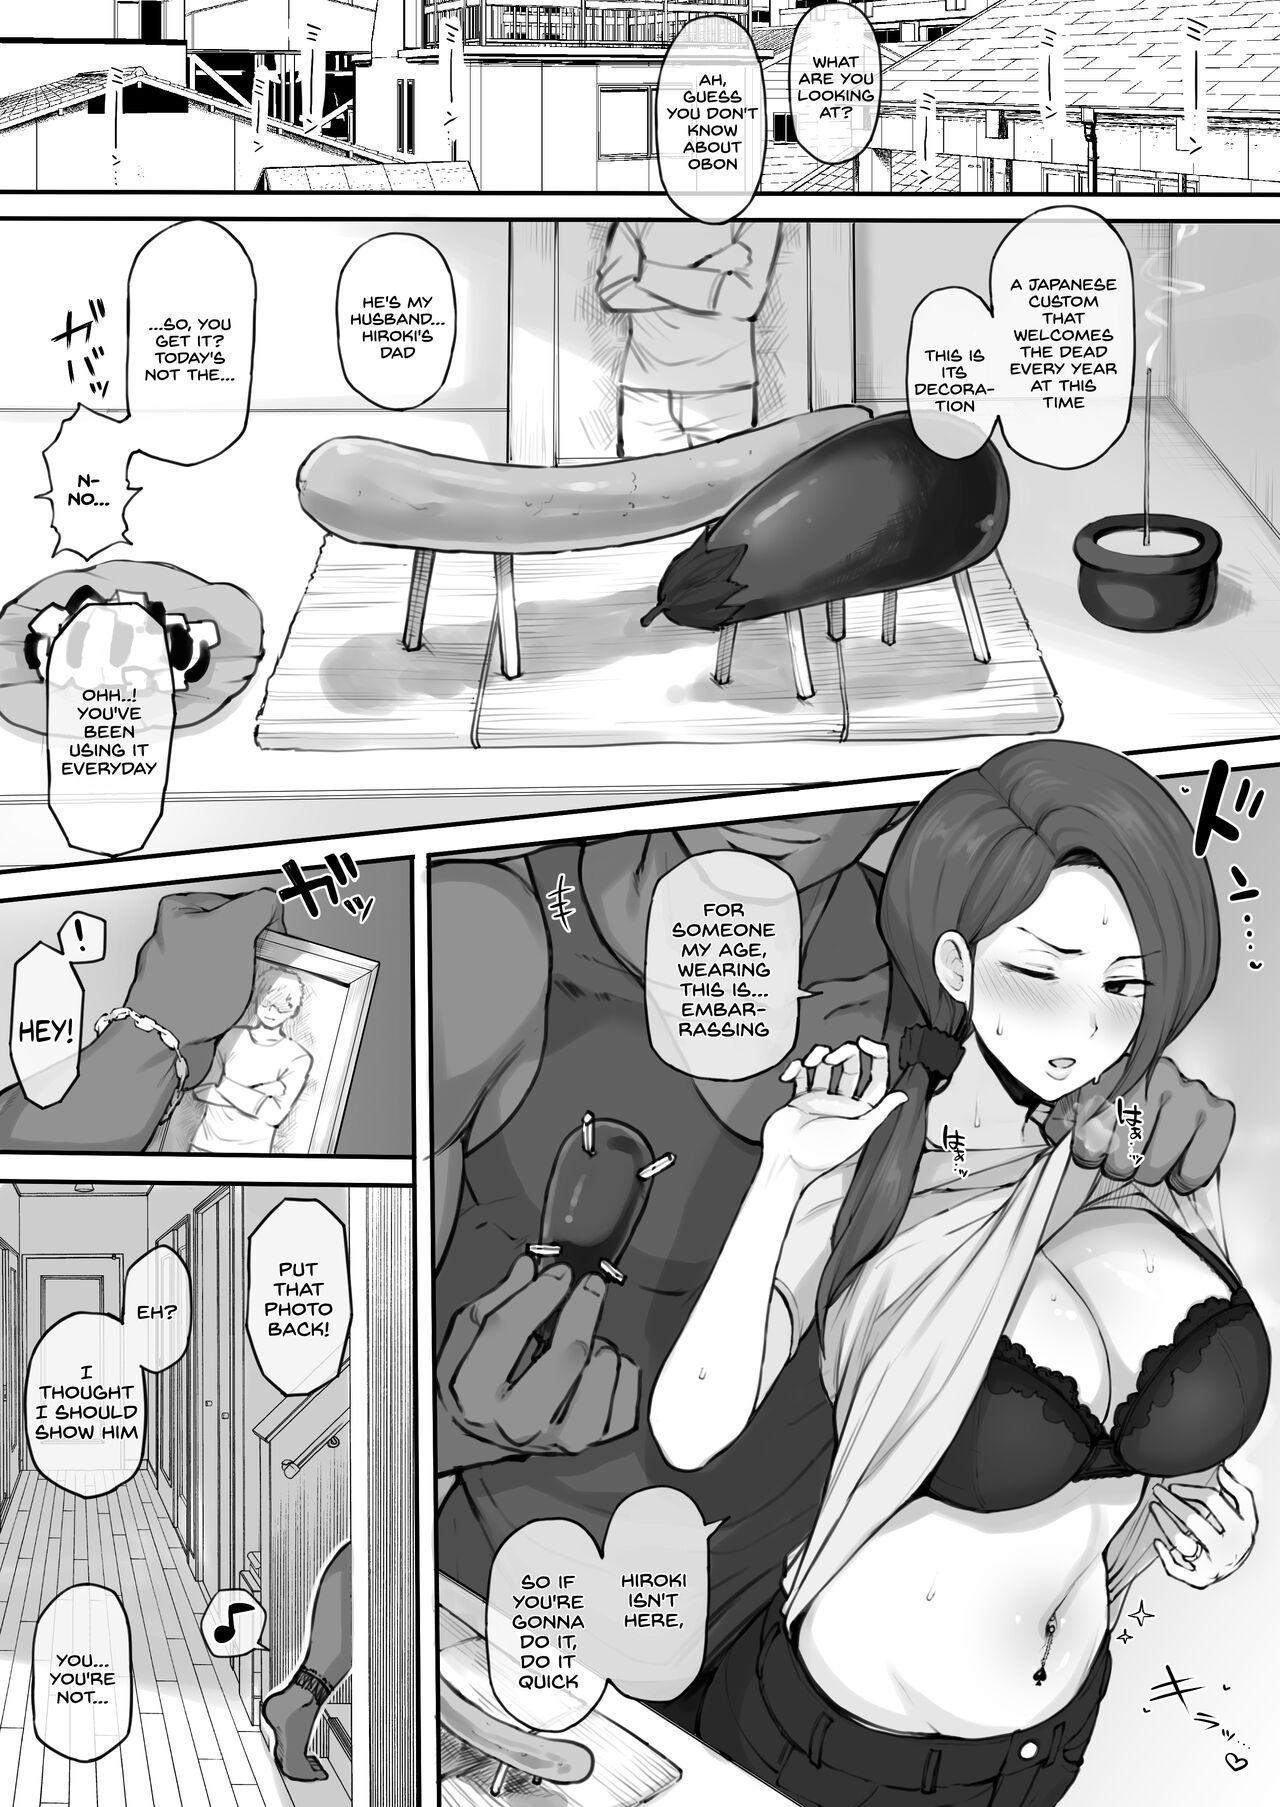 Kokujin no Tenkousei NTR ru Chapters 1-6 part 1 Plus Bonus chapter: Stolen Mother’s Breasts 17